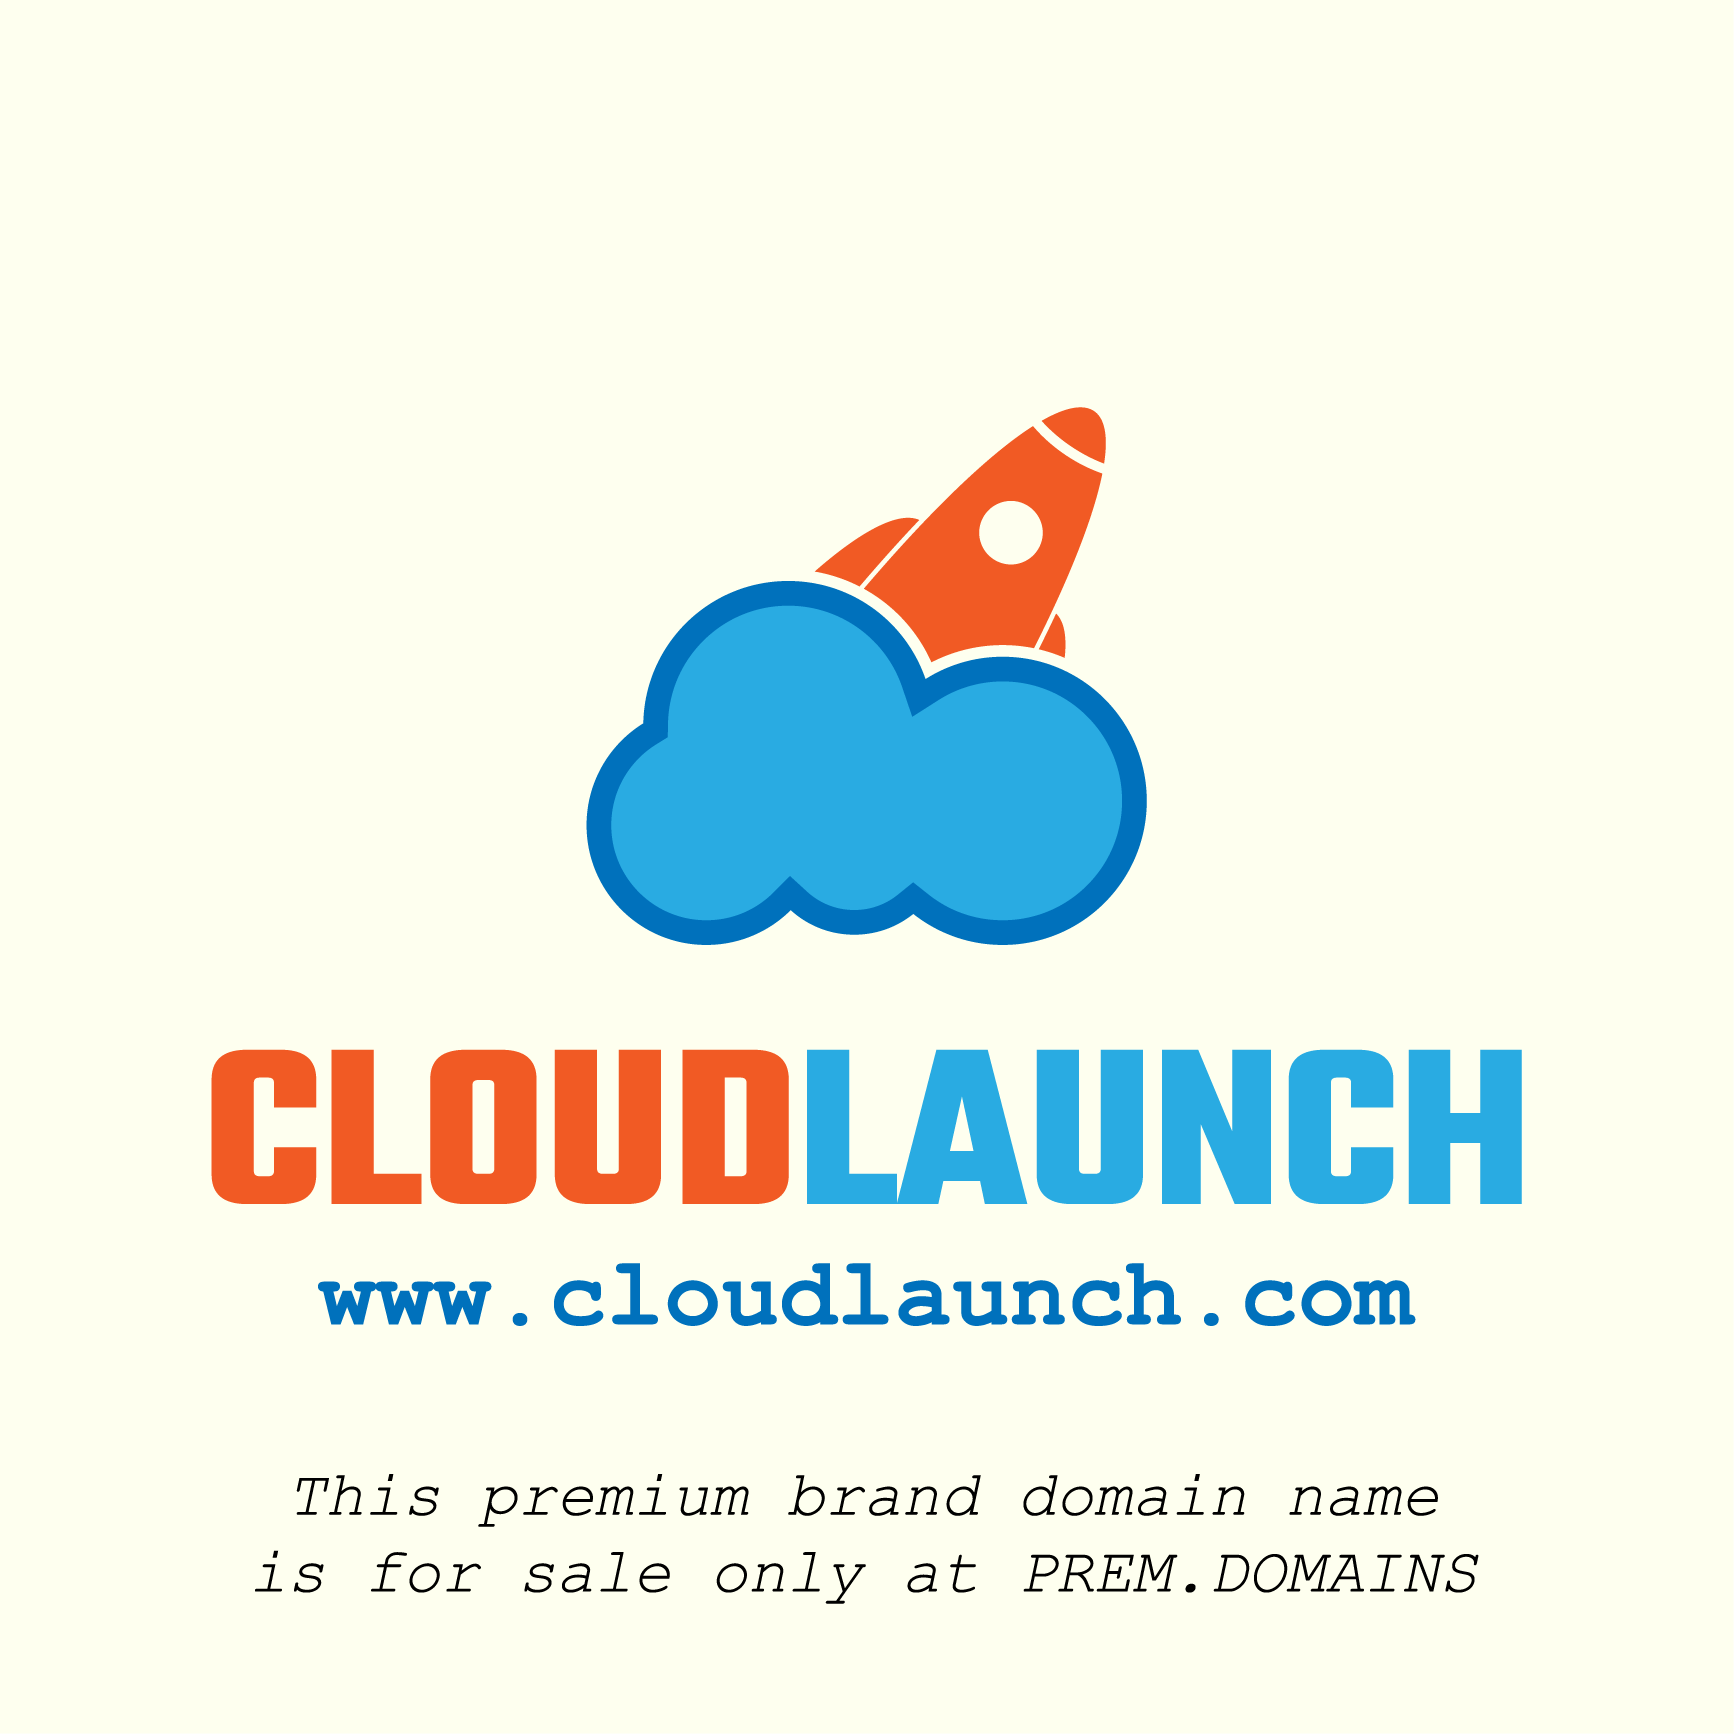 CloudLaunch.com custom logo product card image